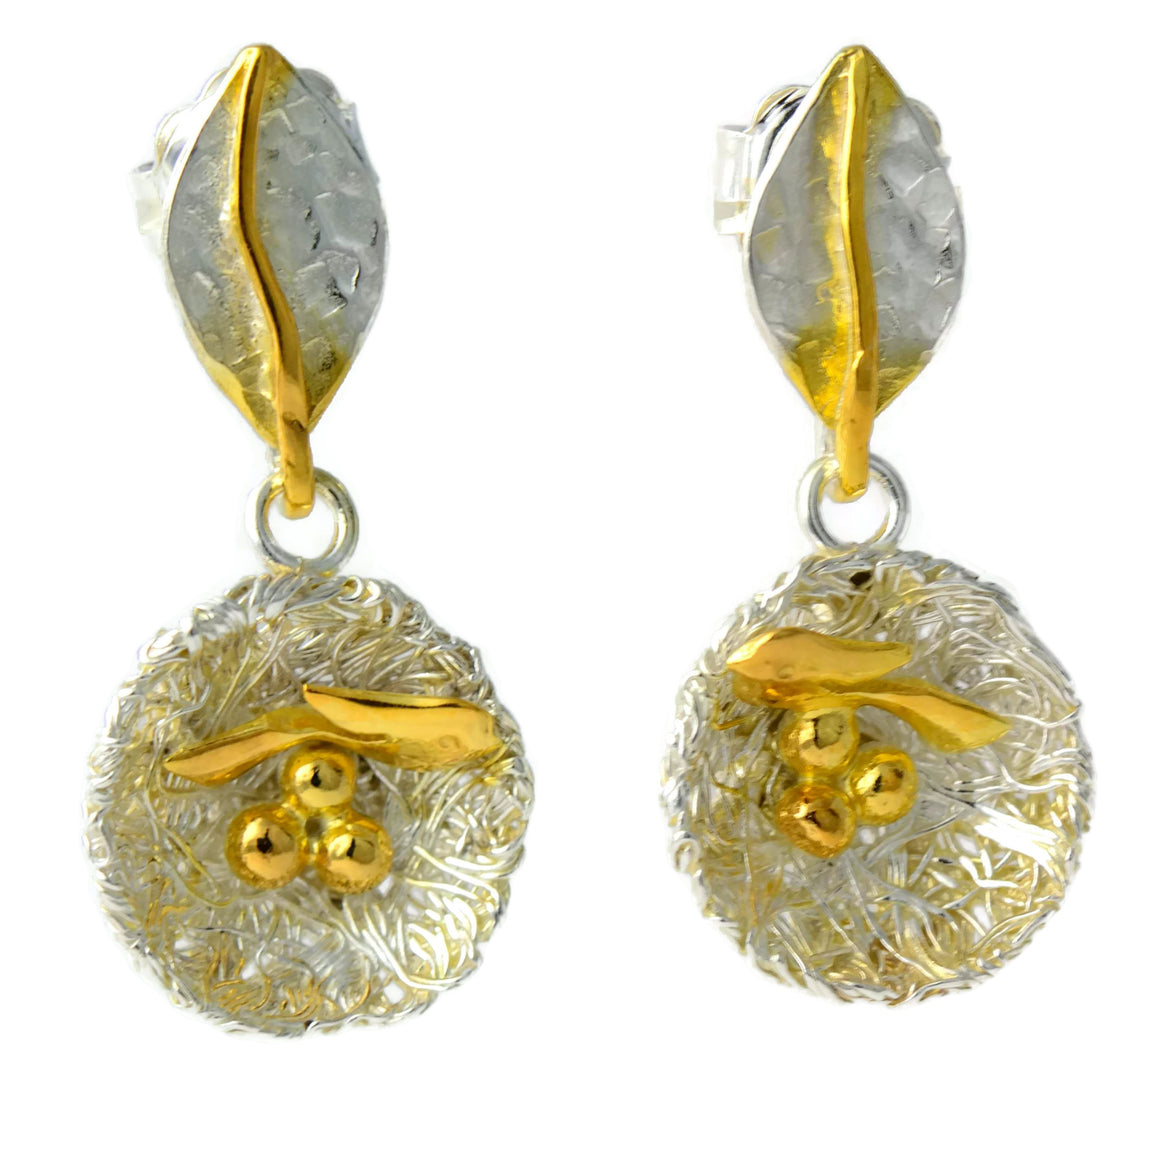 Bird's nest earrings with Golden Bird and Eggs